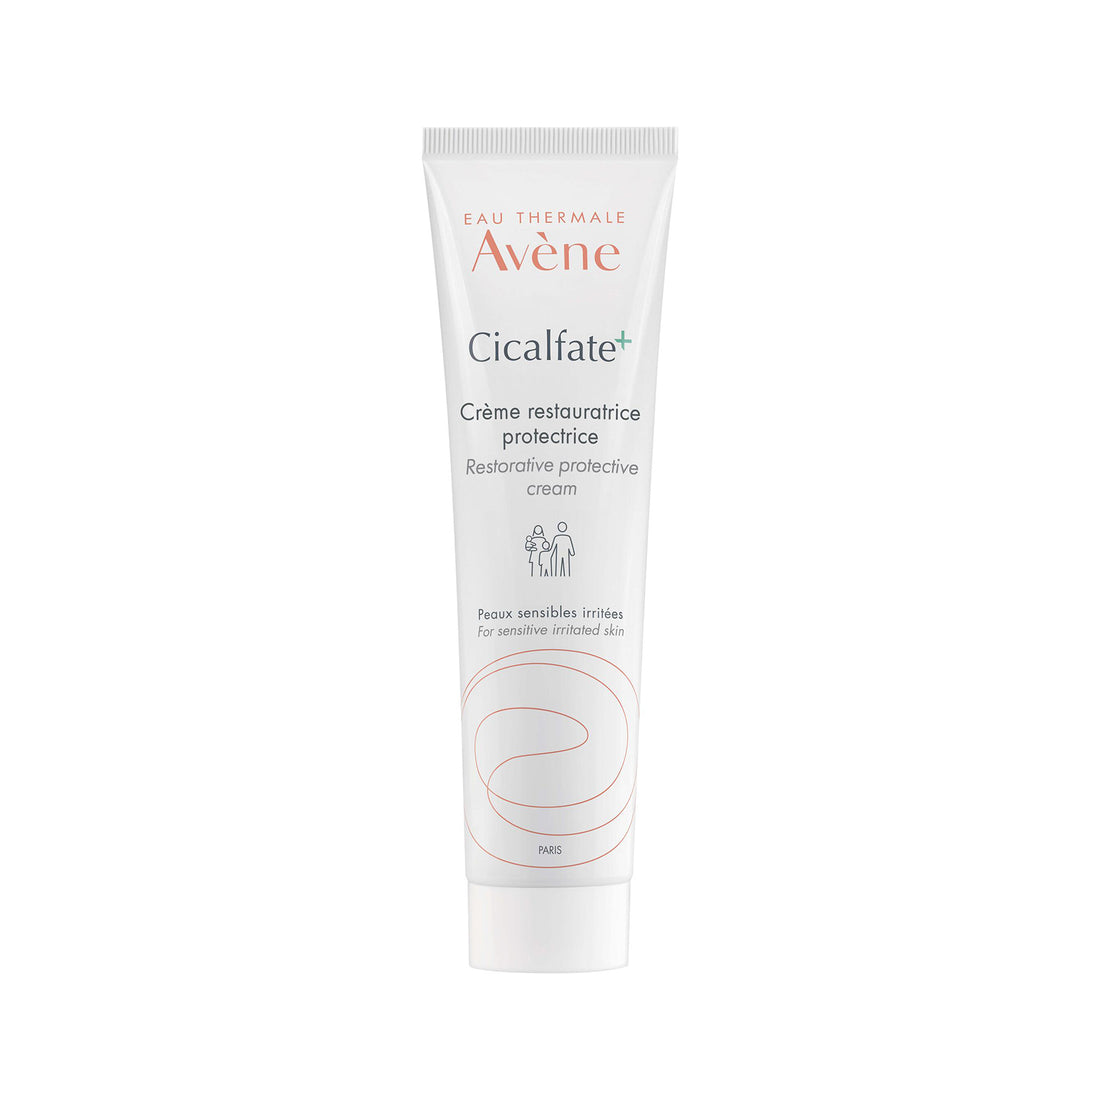 Avène Cicalfate+ Repairing Protective Cream 100ml (3.38fl oz)